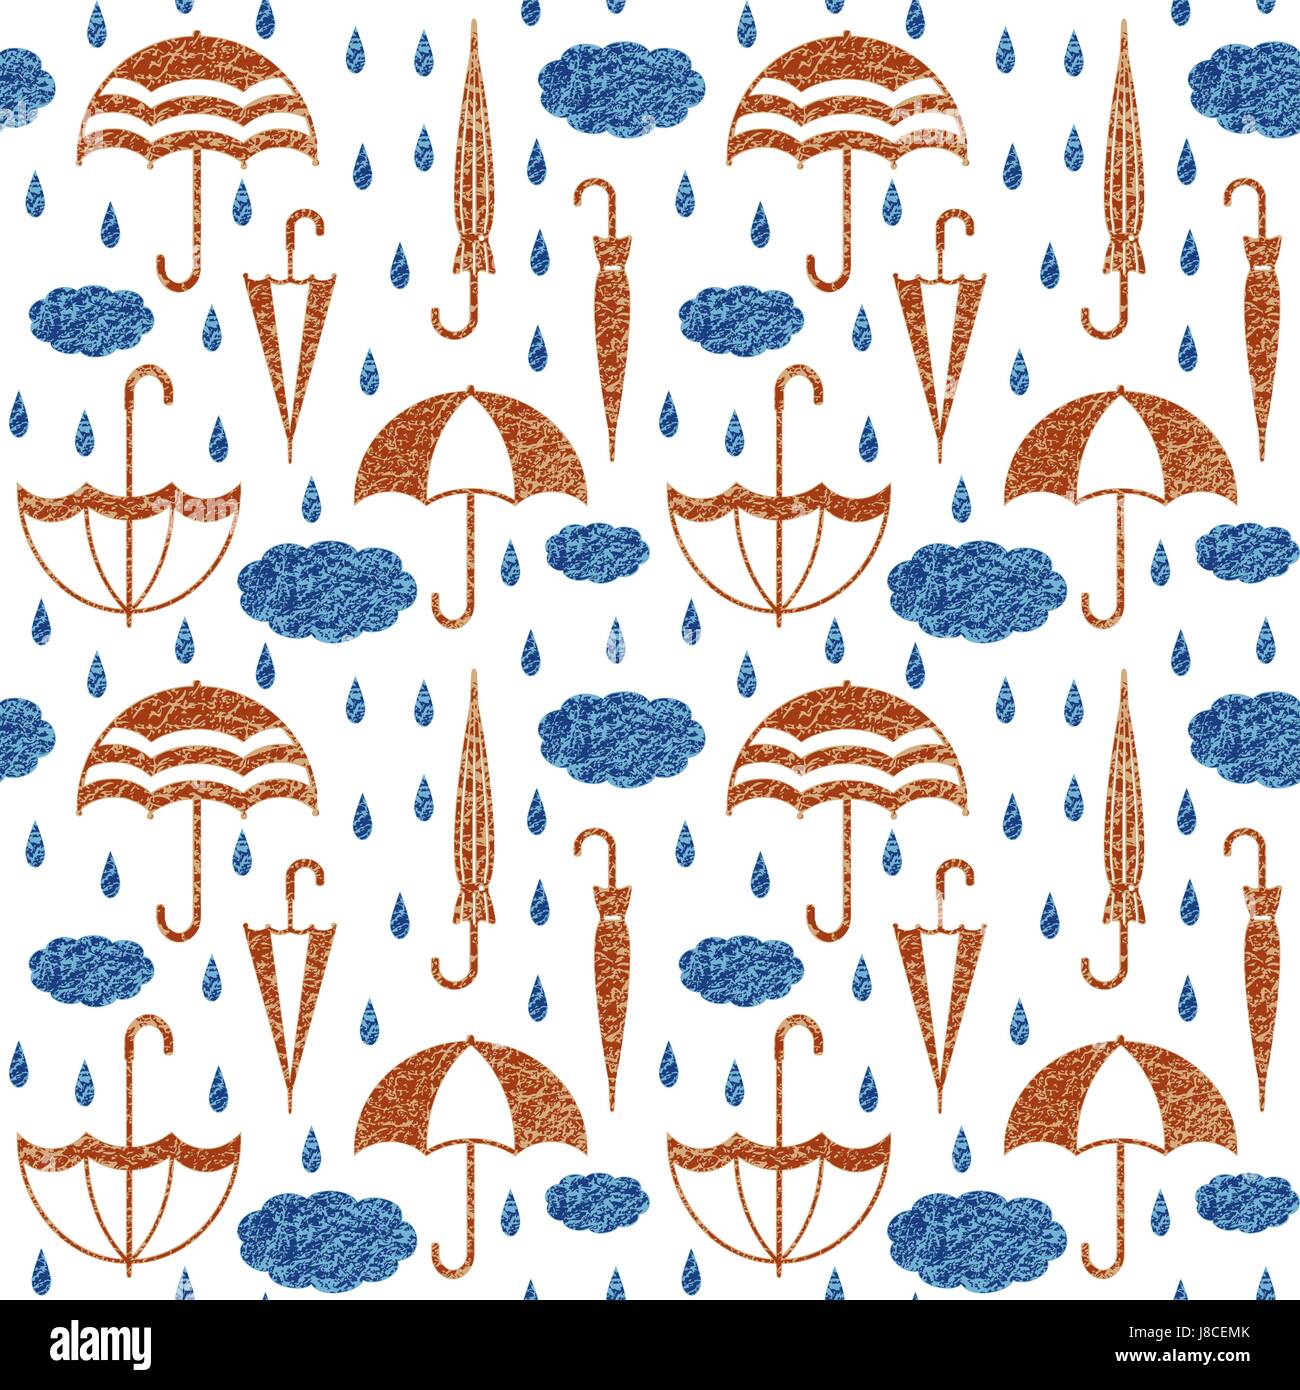 Regenschirm, Regen, Regen, Wetter, Wolke, Regentropfen, bewölkt, nahtlose Muster, Hintergrund, Symbol, Saison, Herbst, Herbst, Frühling, Natur, Vektor, illus Stock Vektor